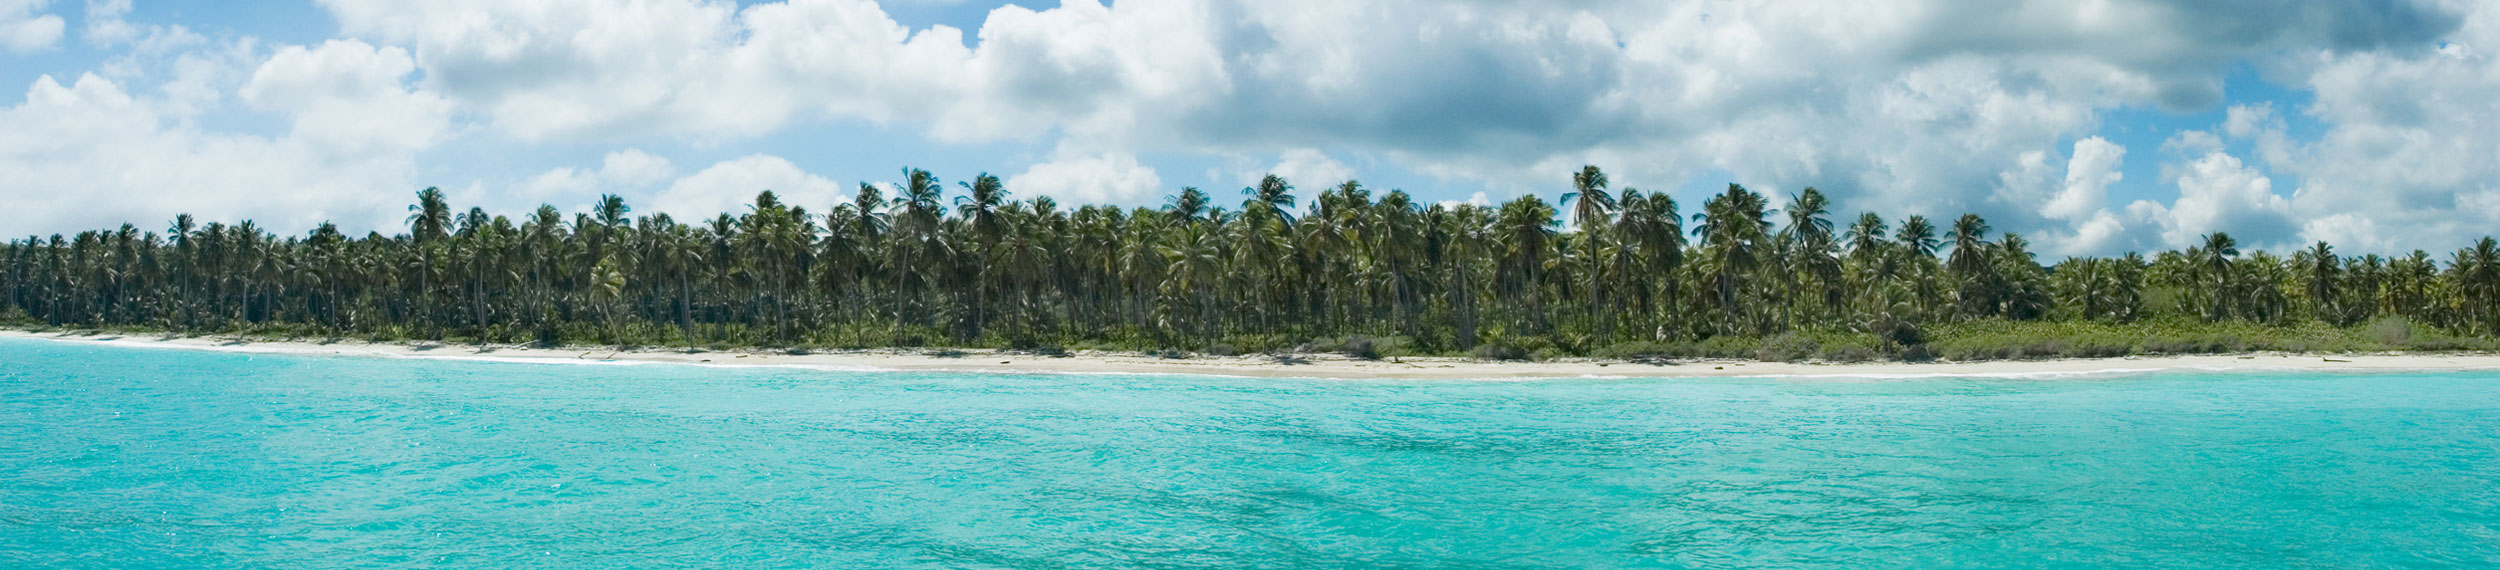 Island views in Honiara, Solomon Islands